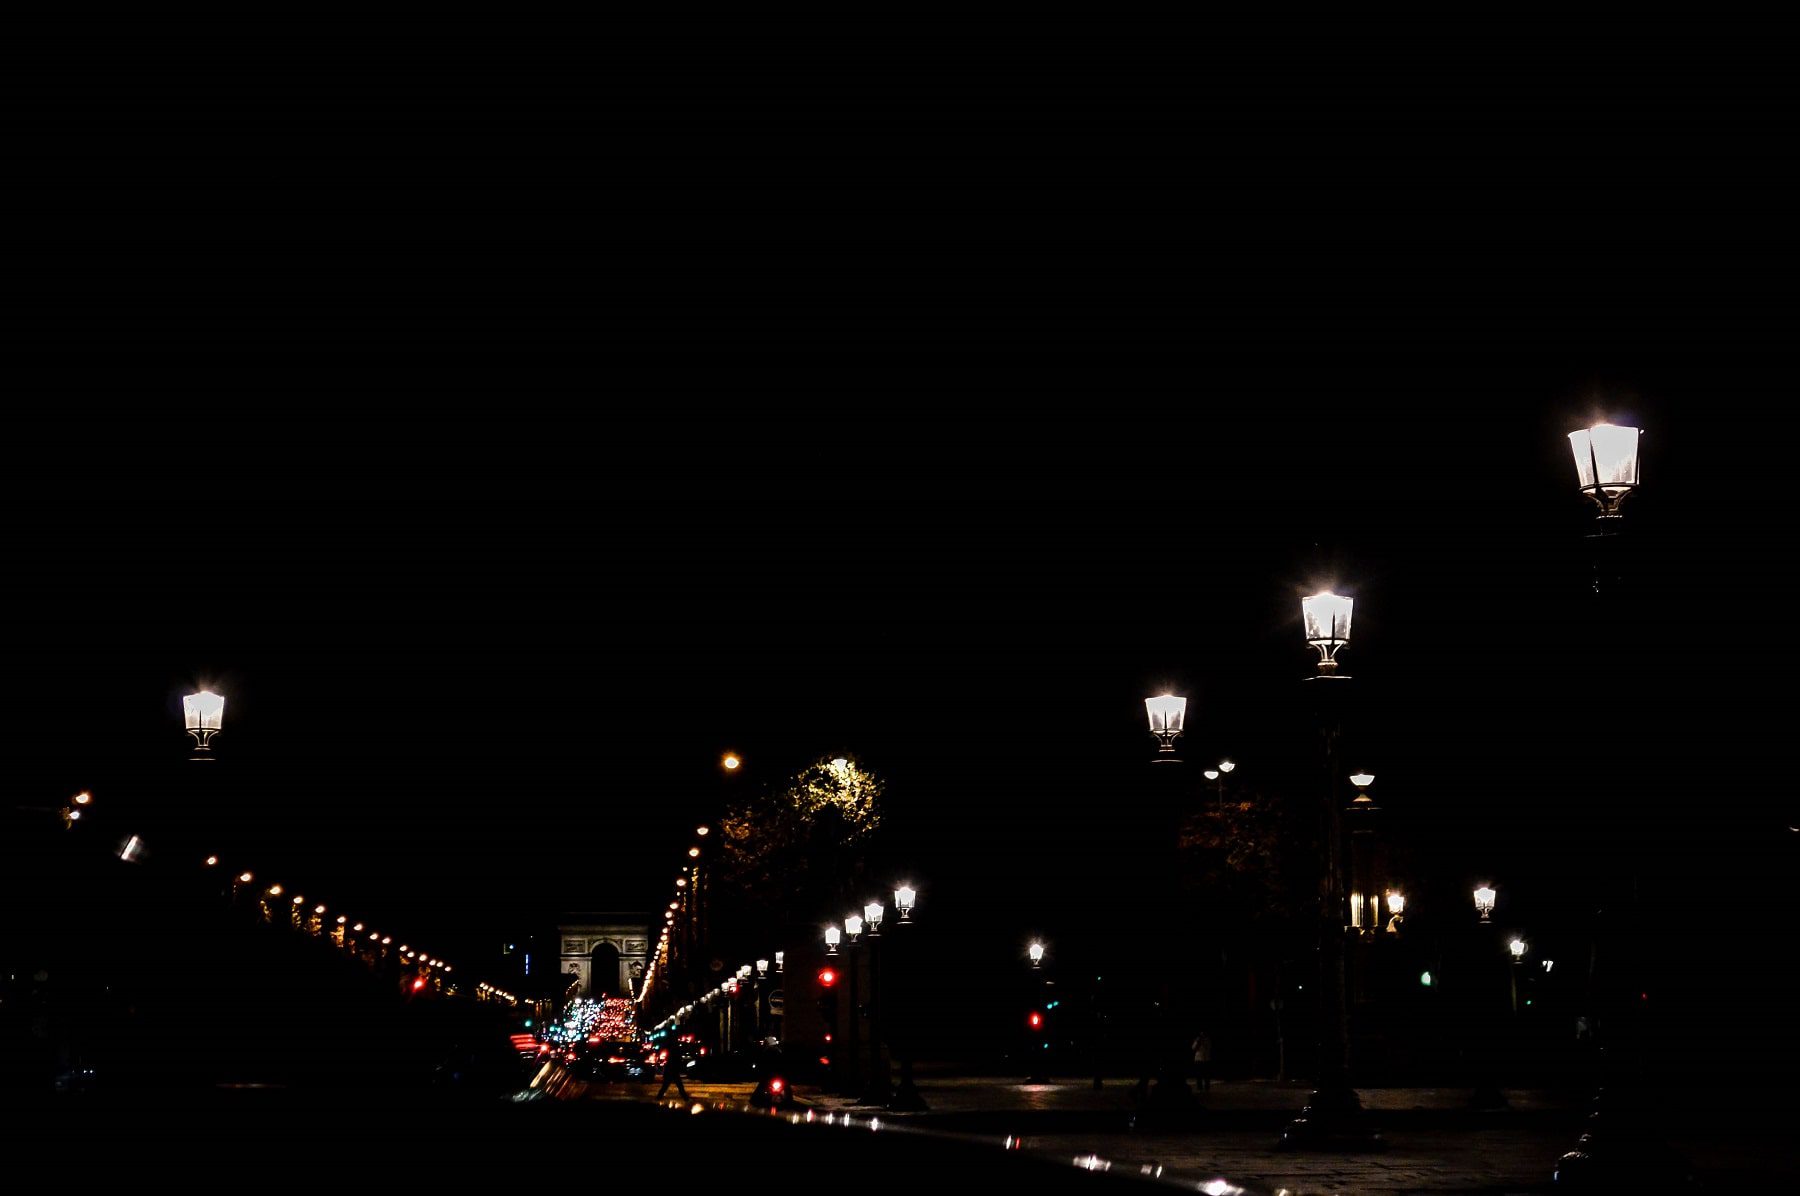 Photos of the Arc du Triomphe in Paris at night